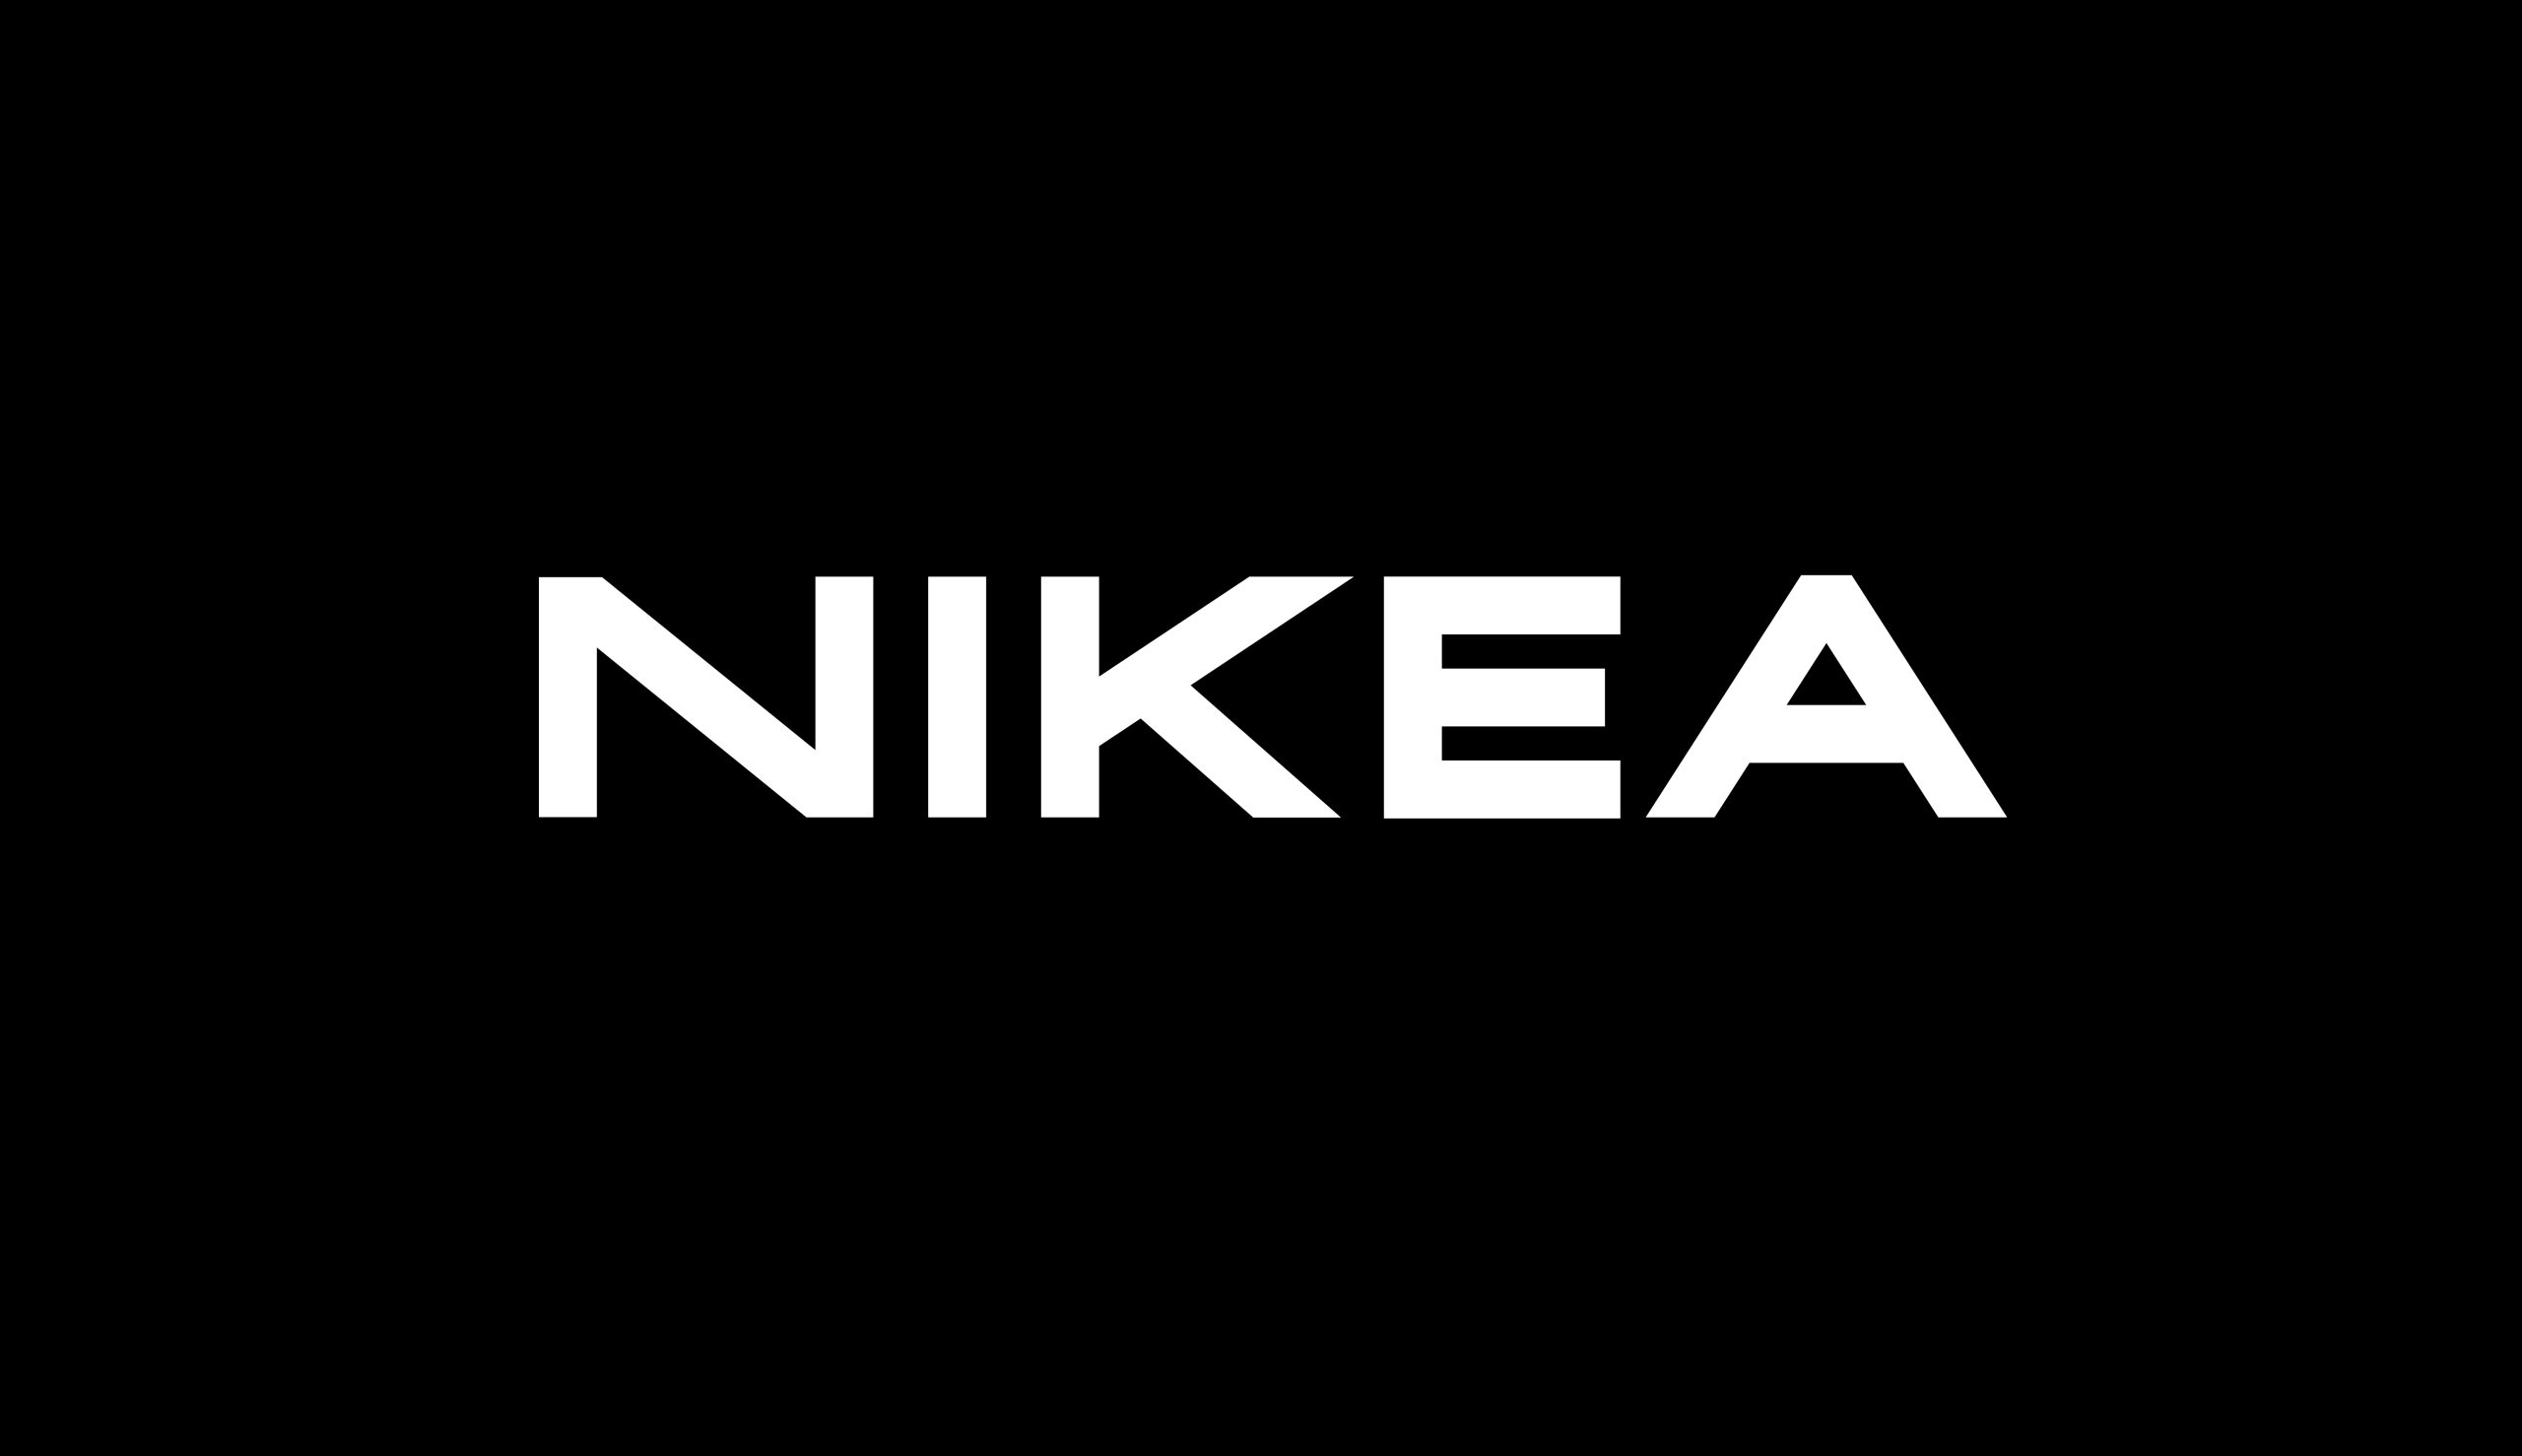 Nikea Sans Serif Font